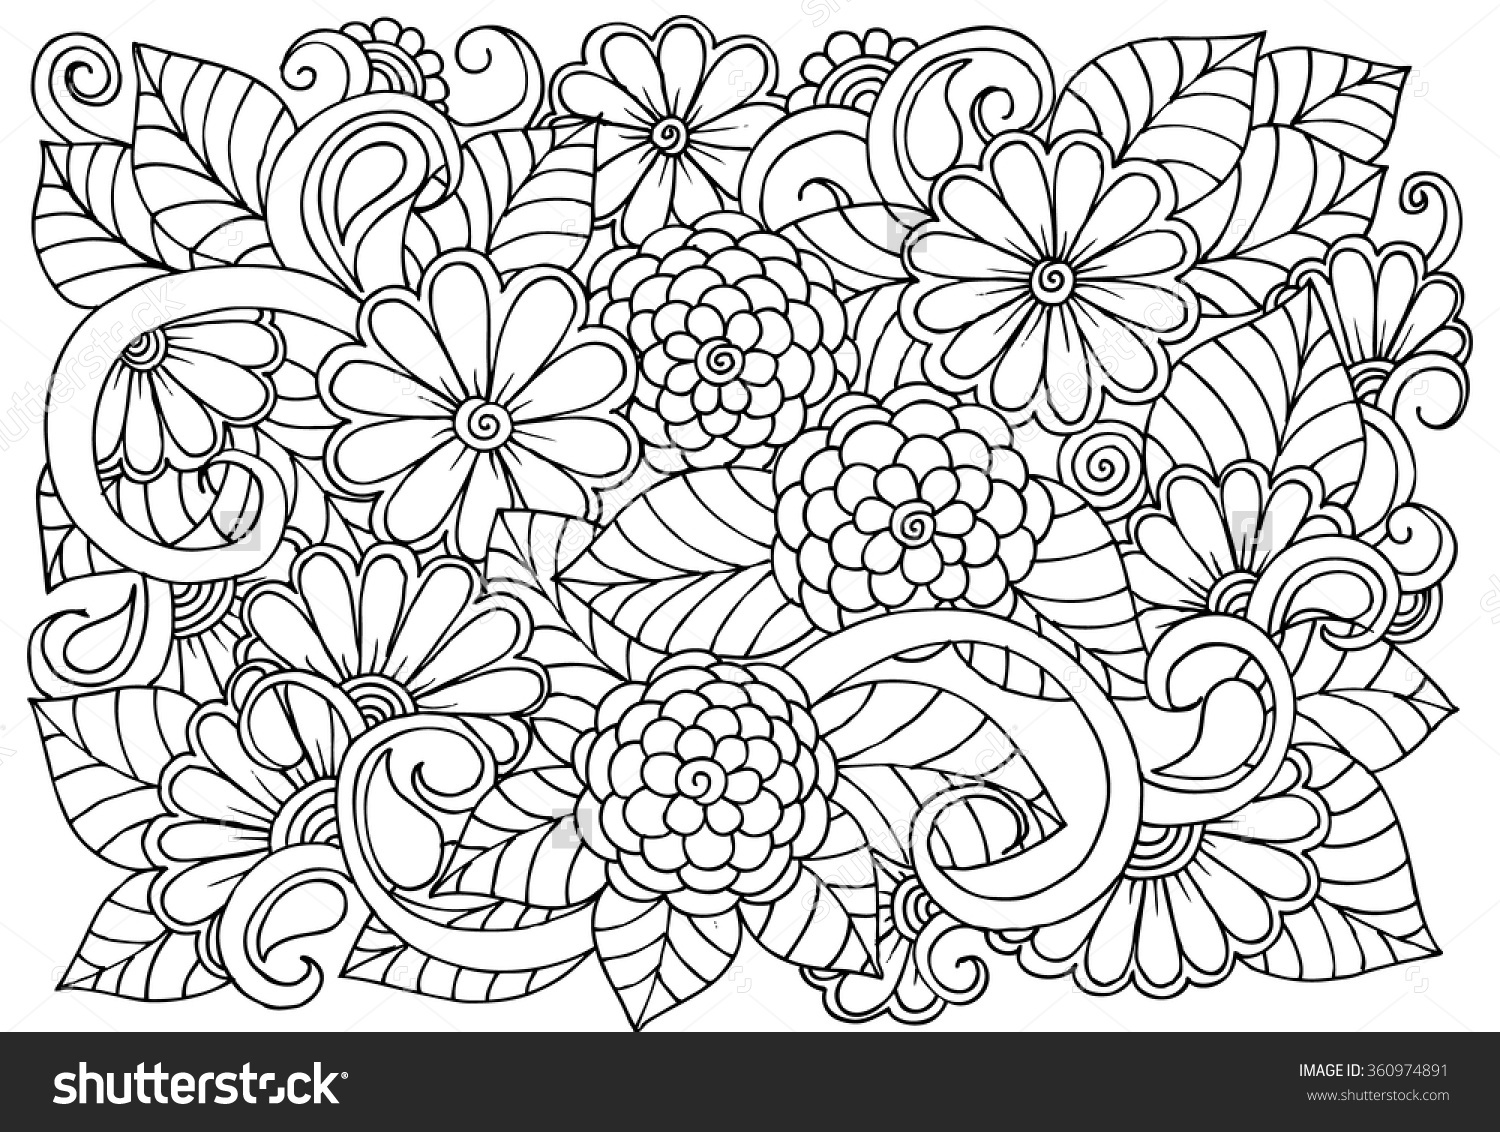 Carpet Of Leaves coloring #6, Download drawings